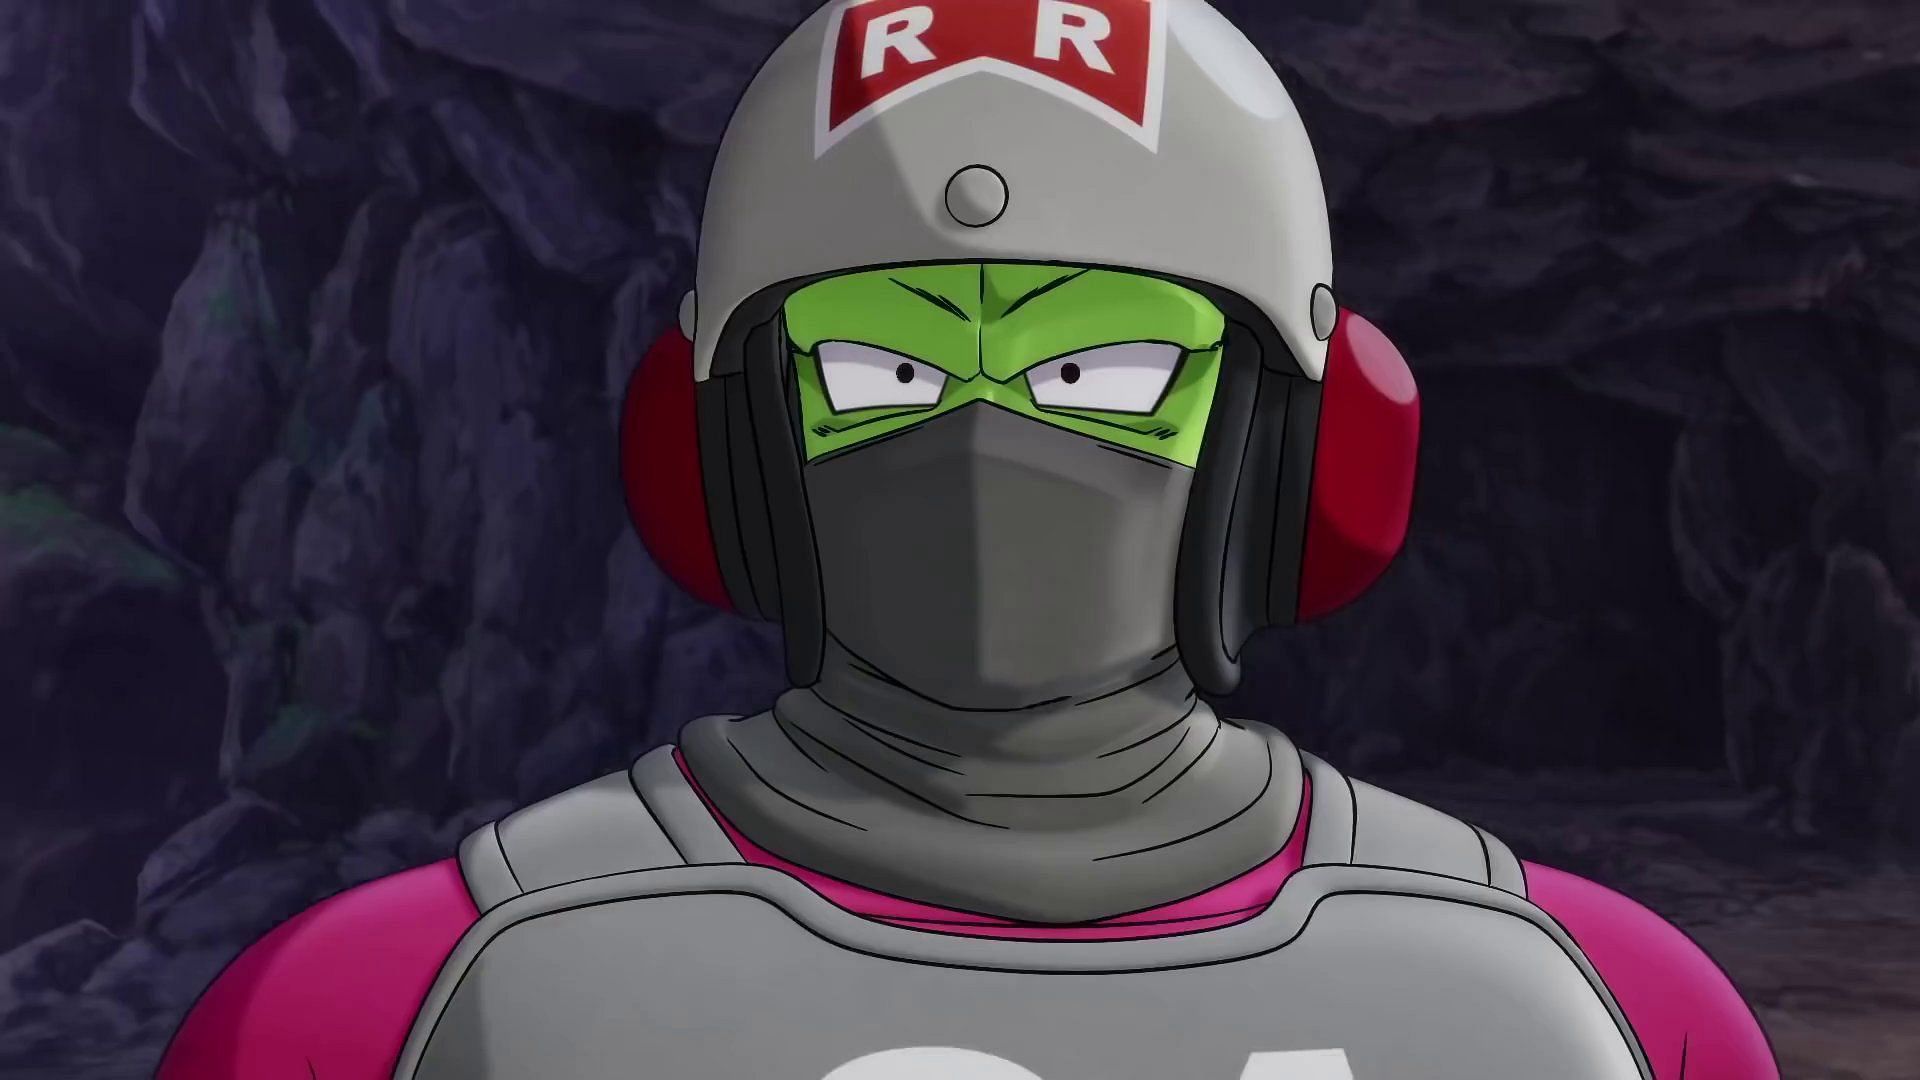 Piccolo using his new uniform (Image credits: Akira Toriyama/Shueisha, Viz Media, Dragon Ball Super: Super Hero)